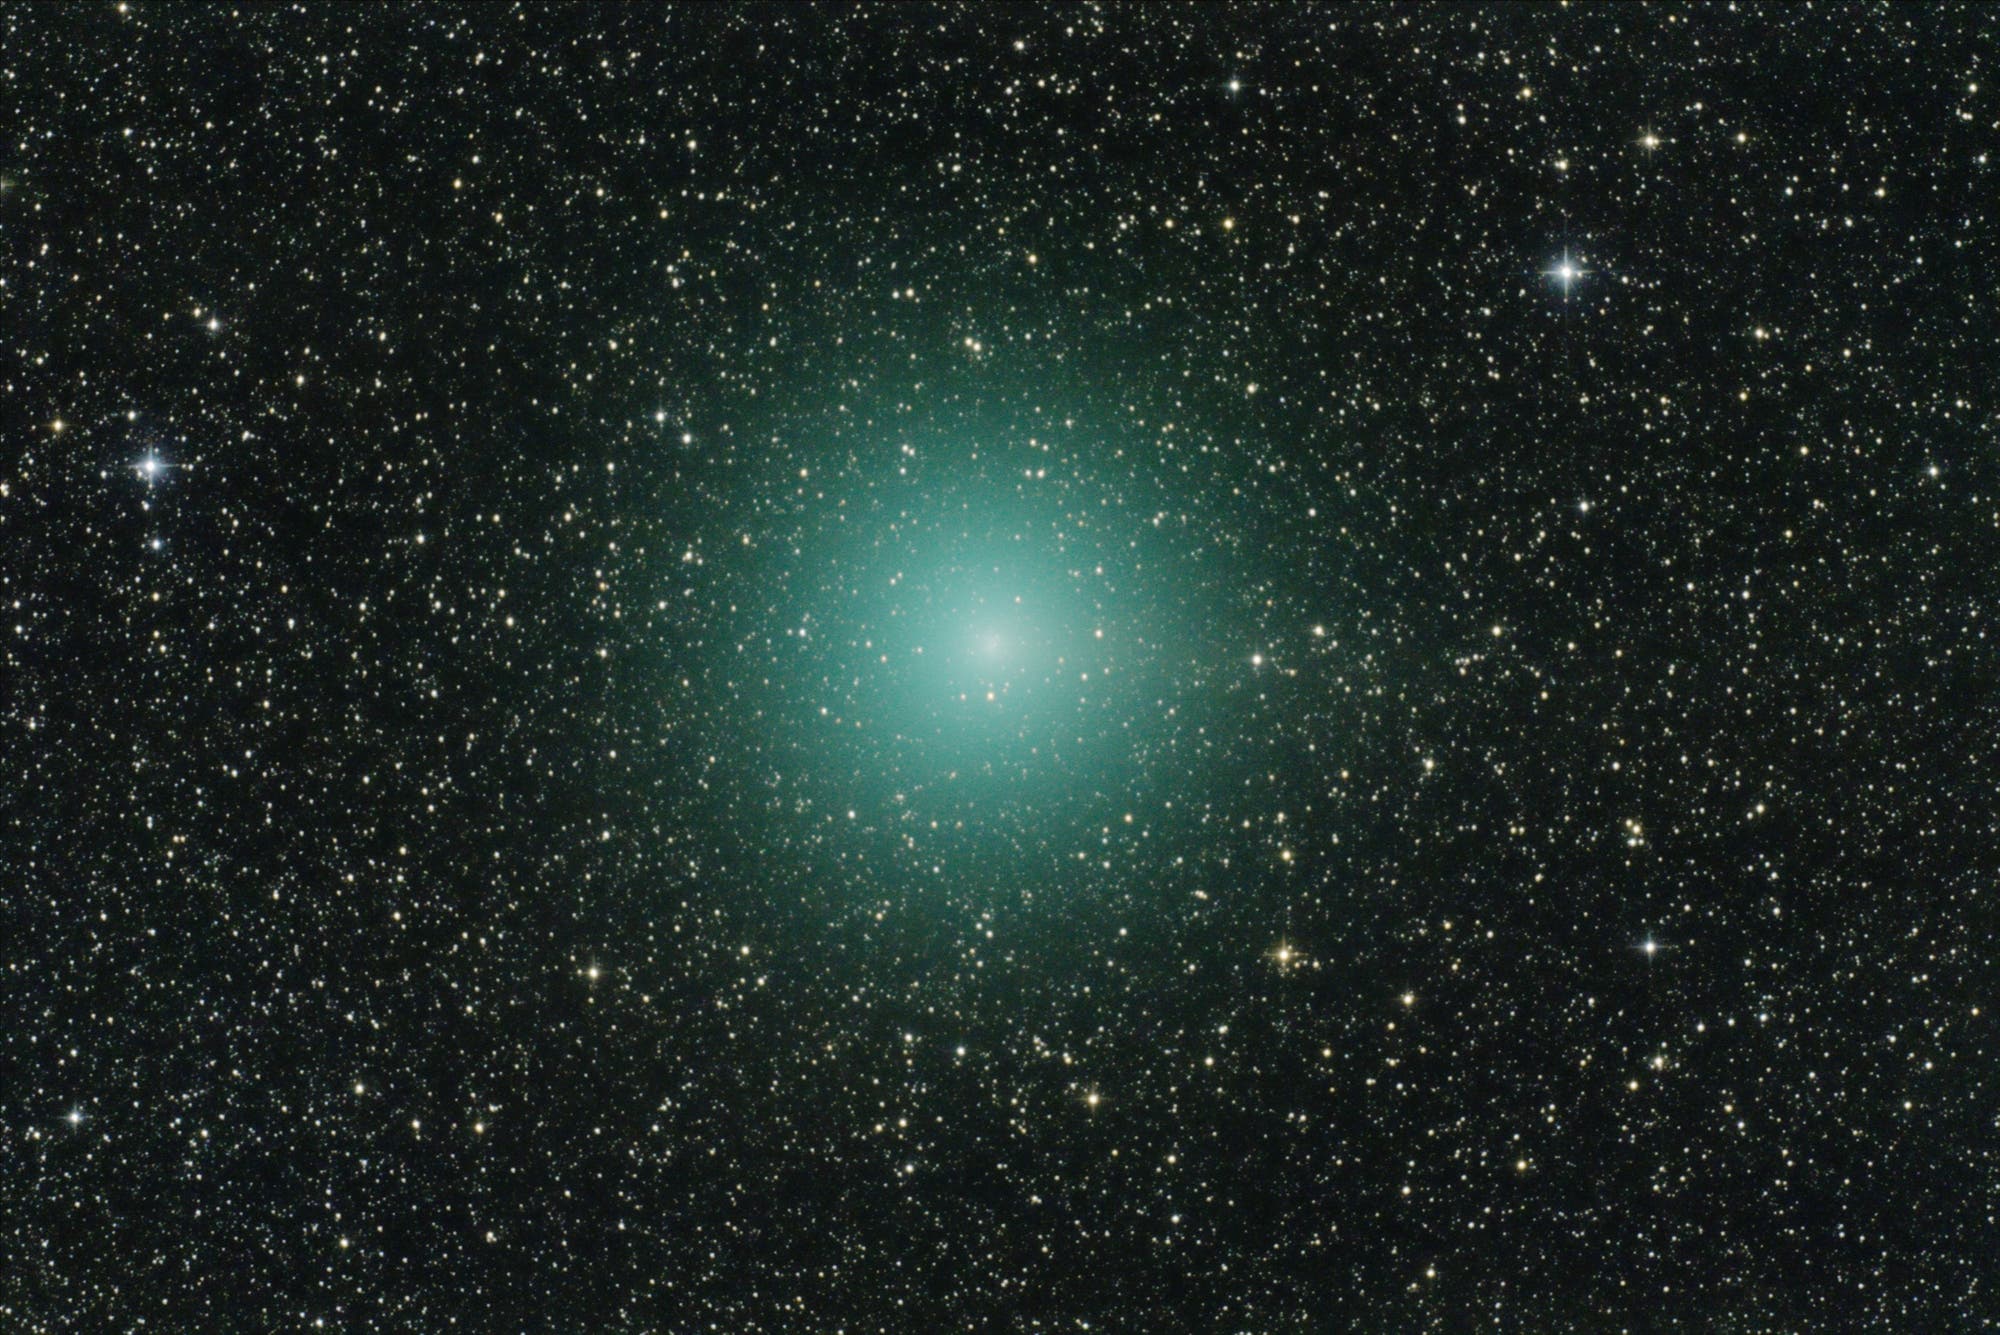 Comet 252P/LINEAR